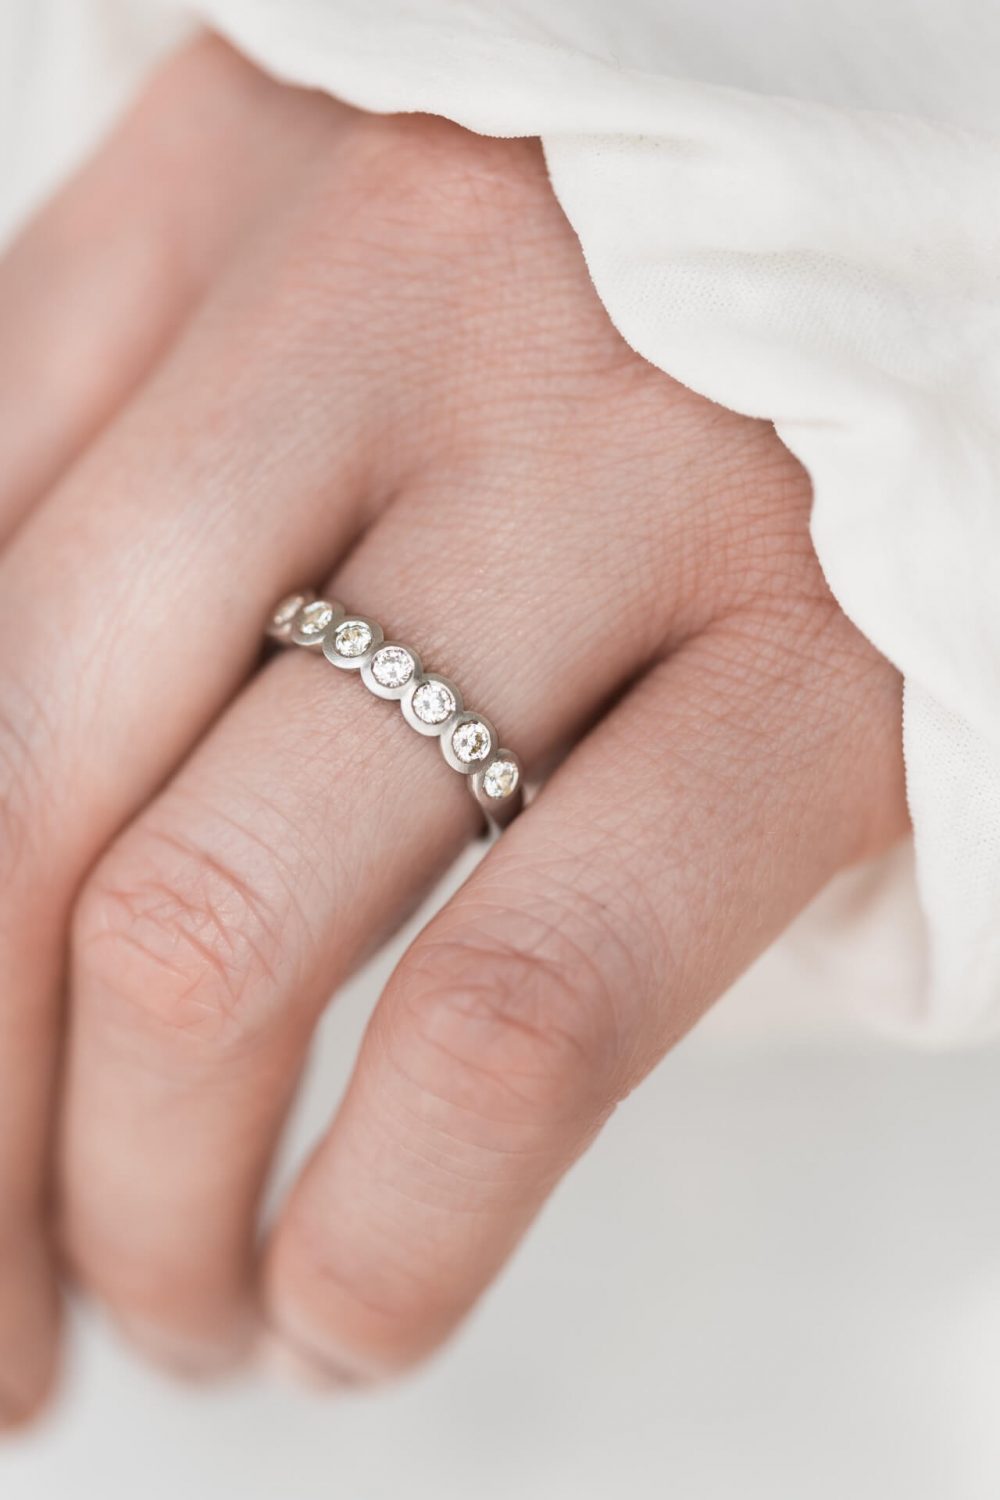 Diamond Eternity Ring On Models Wedding Finger. Contemporary Diamond Ring.